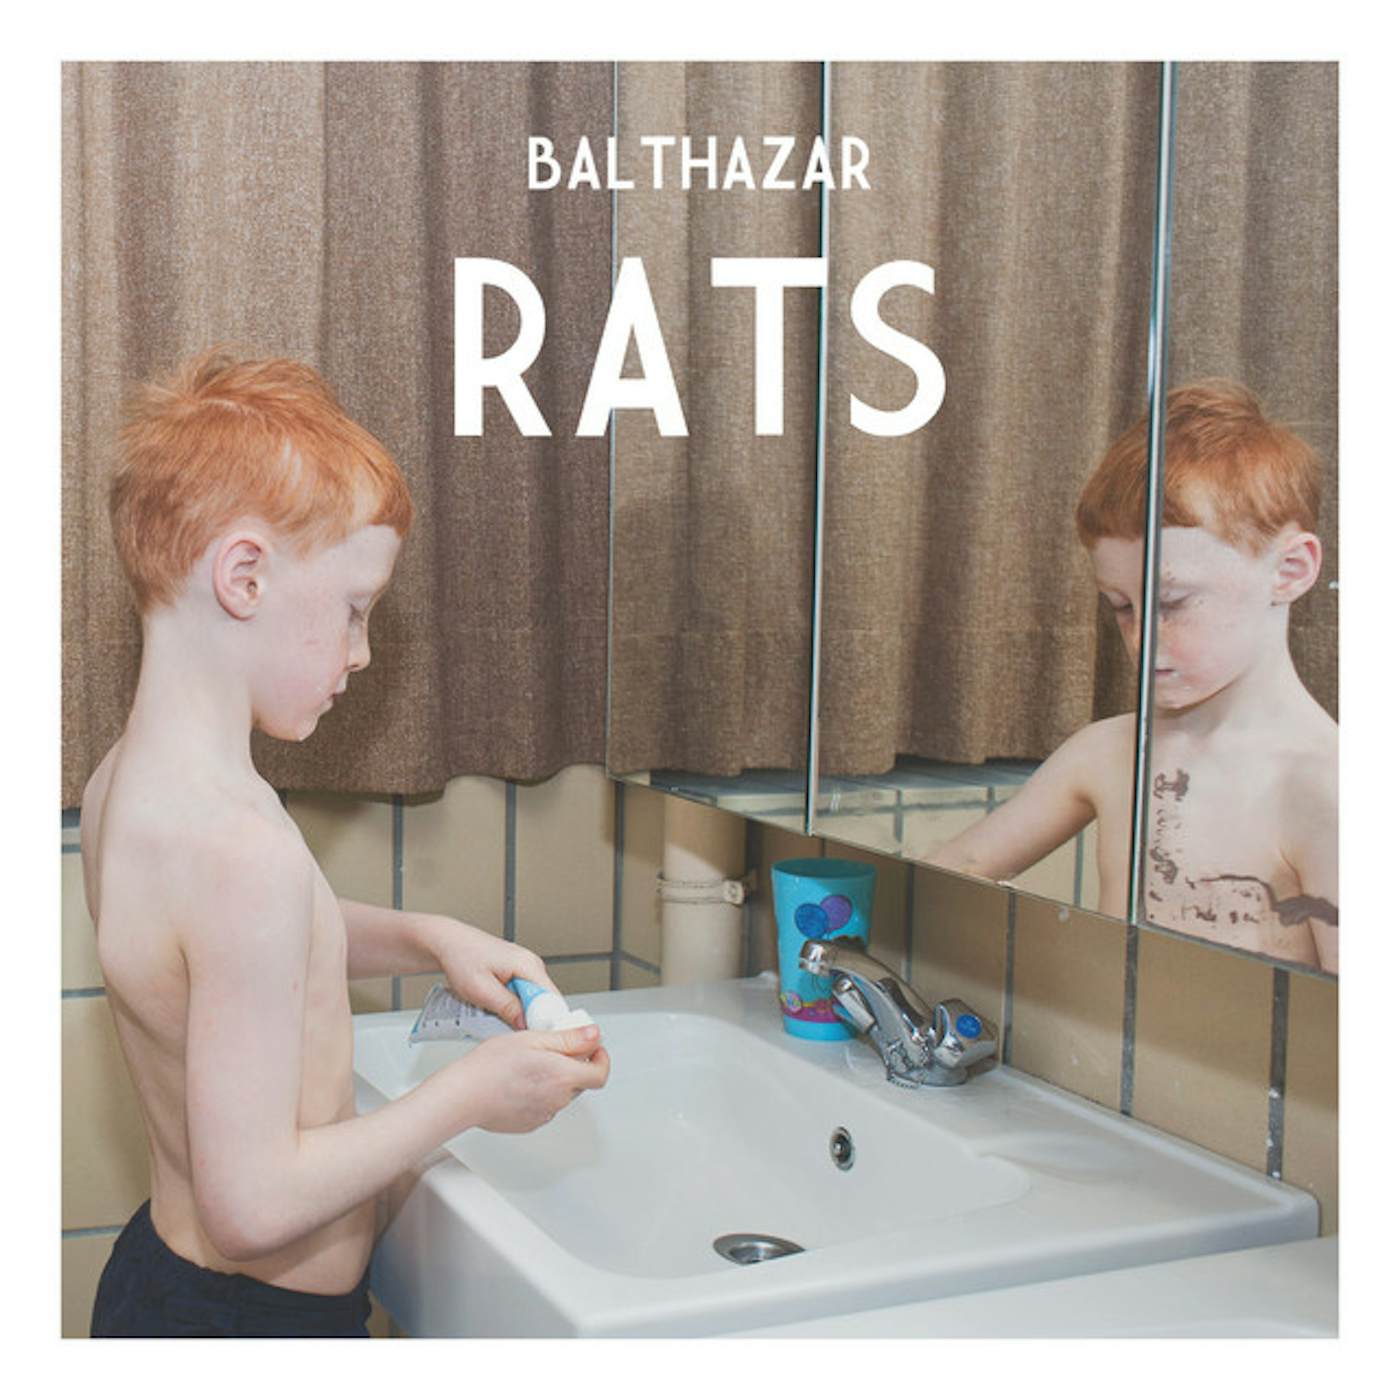 Balthazar RATS CD